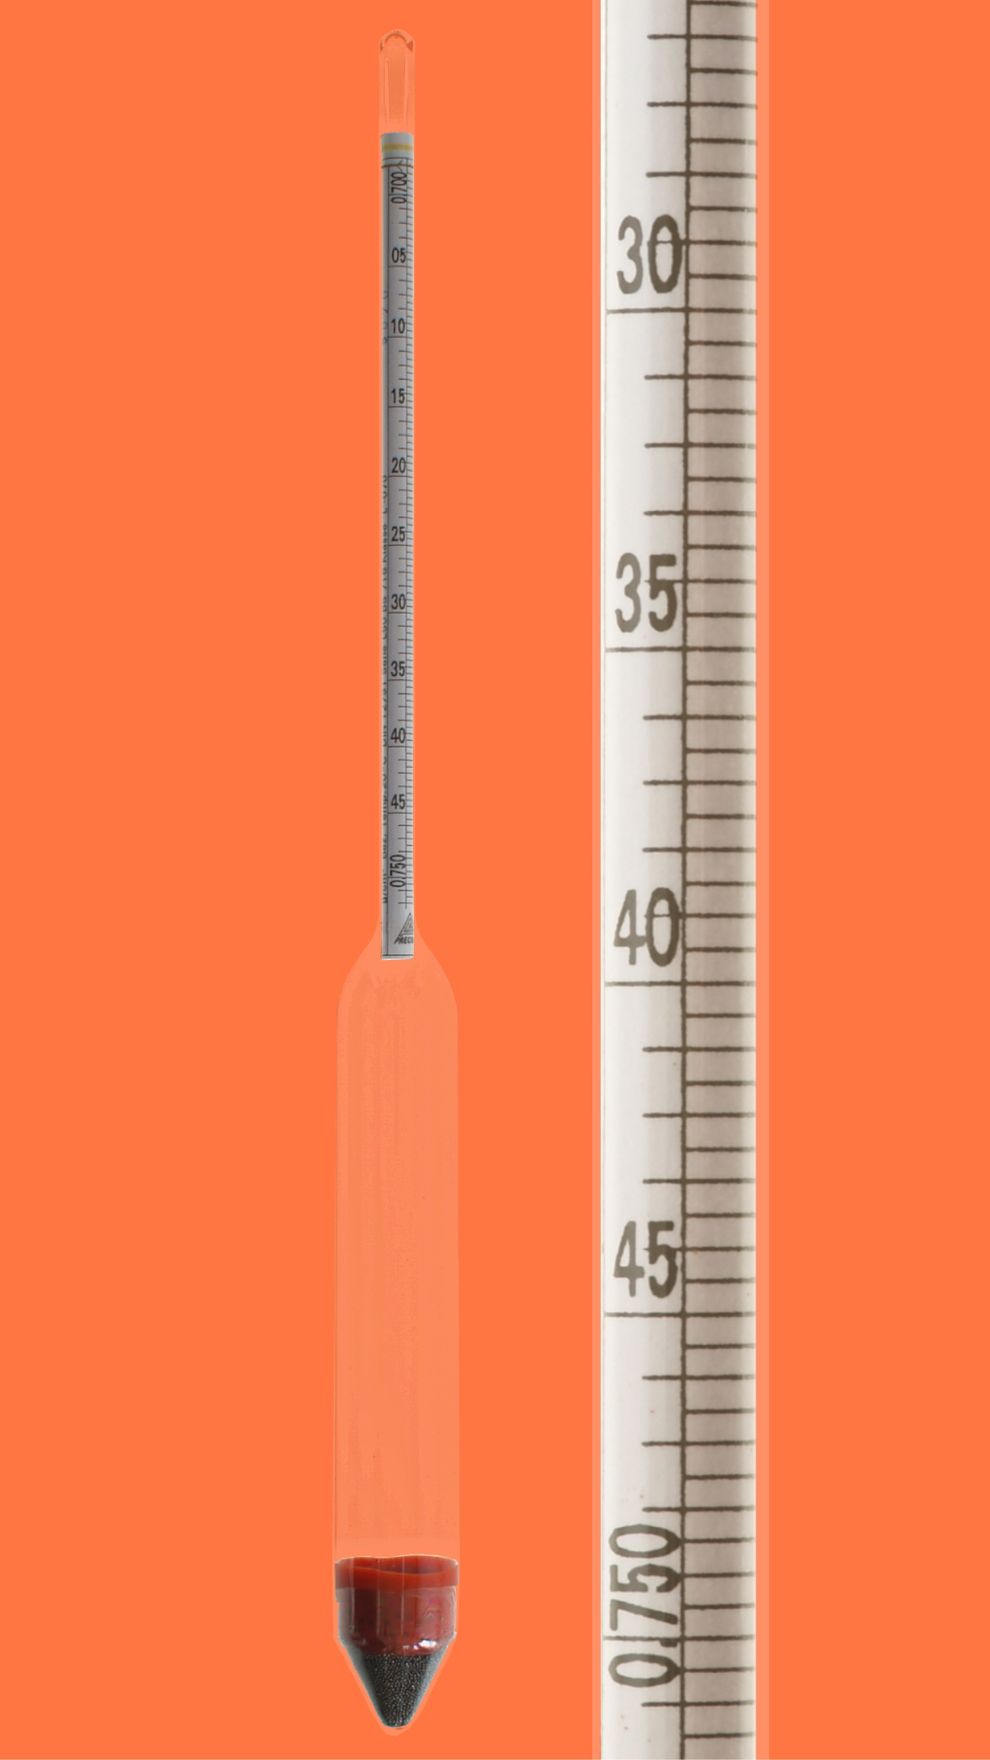 Aräometer, DIN 12791, L50, 0,95-1,00:0,0005g/cm³, Bezugstemp. 20°C, ohne Thermometer